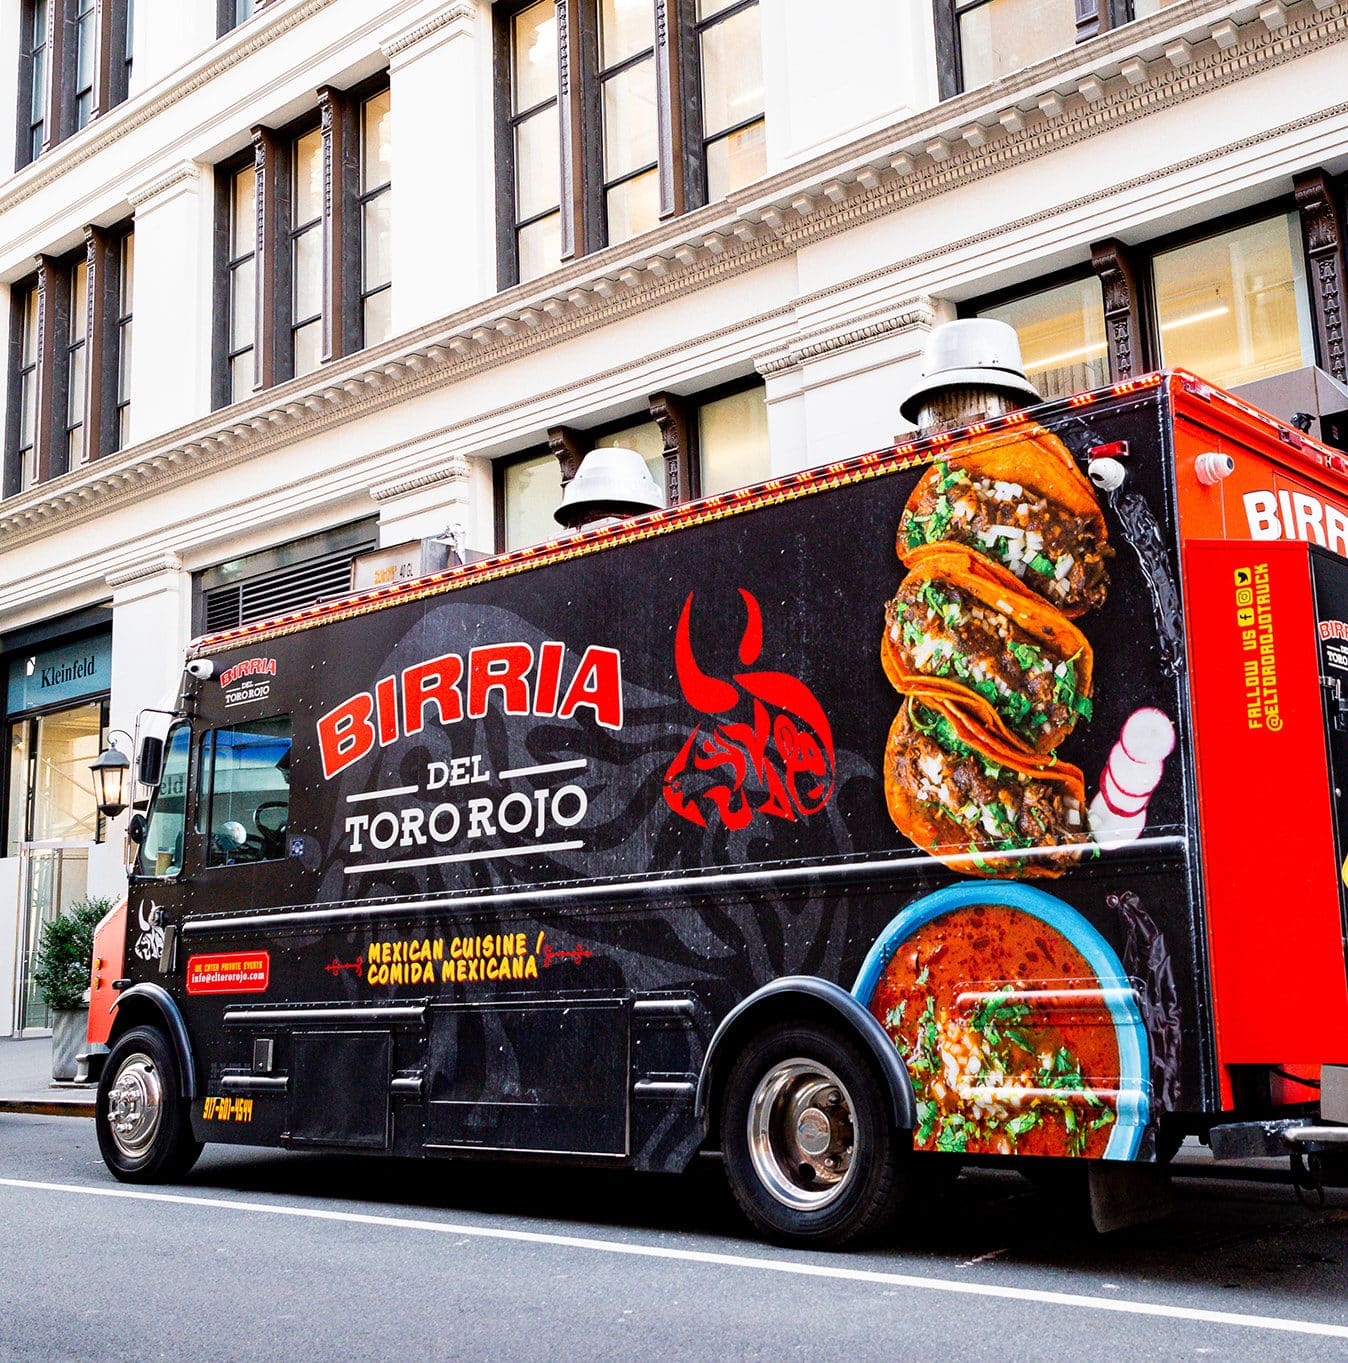 El Toro Rojo Taco Food Truck NYC